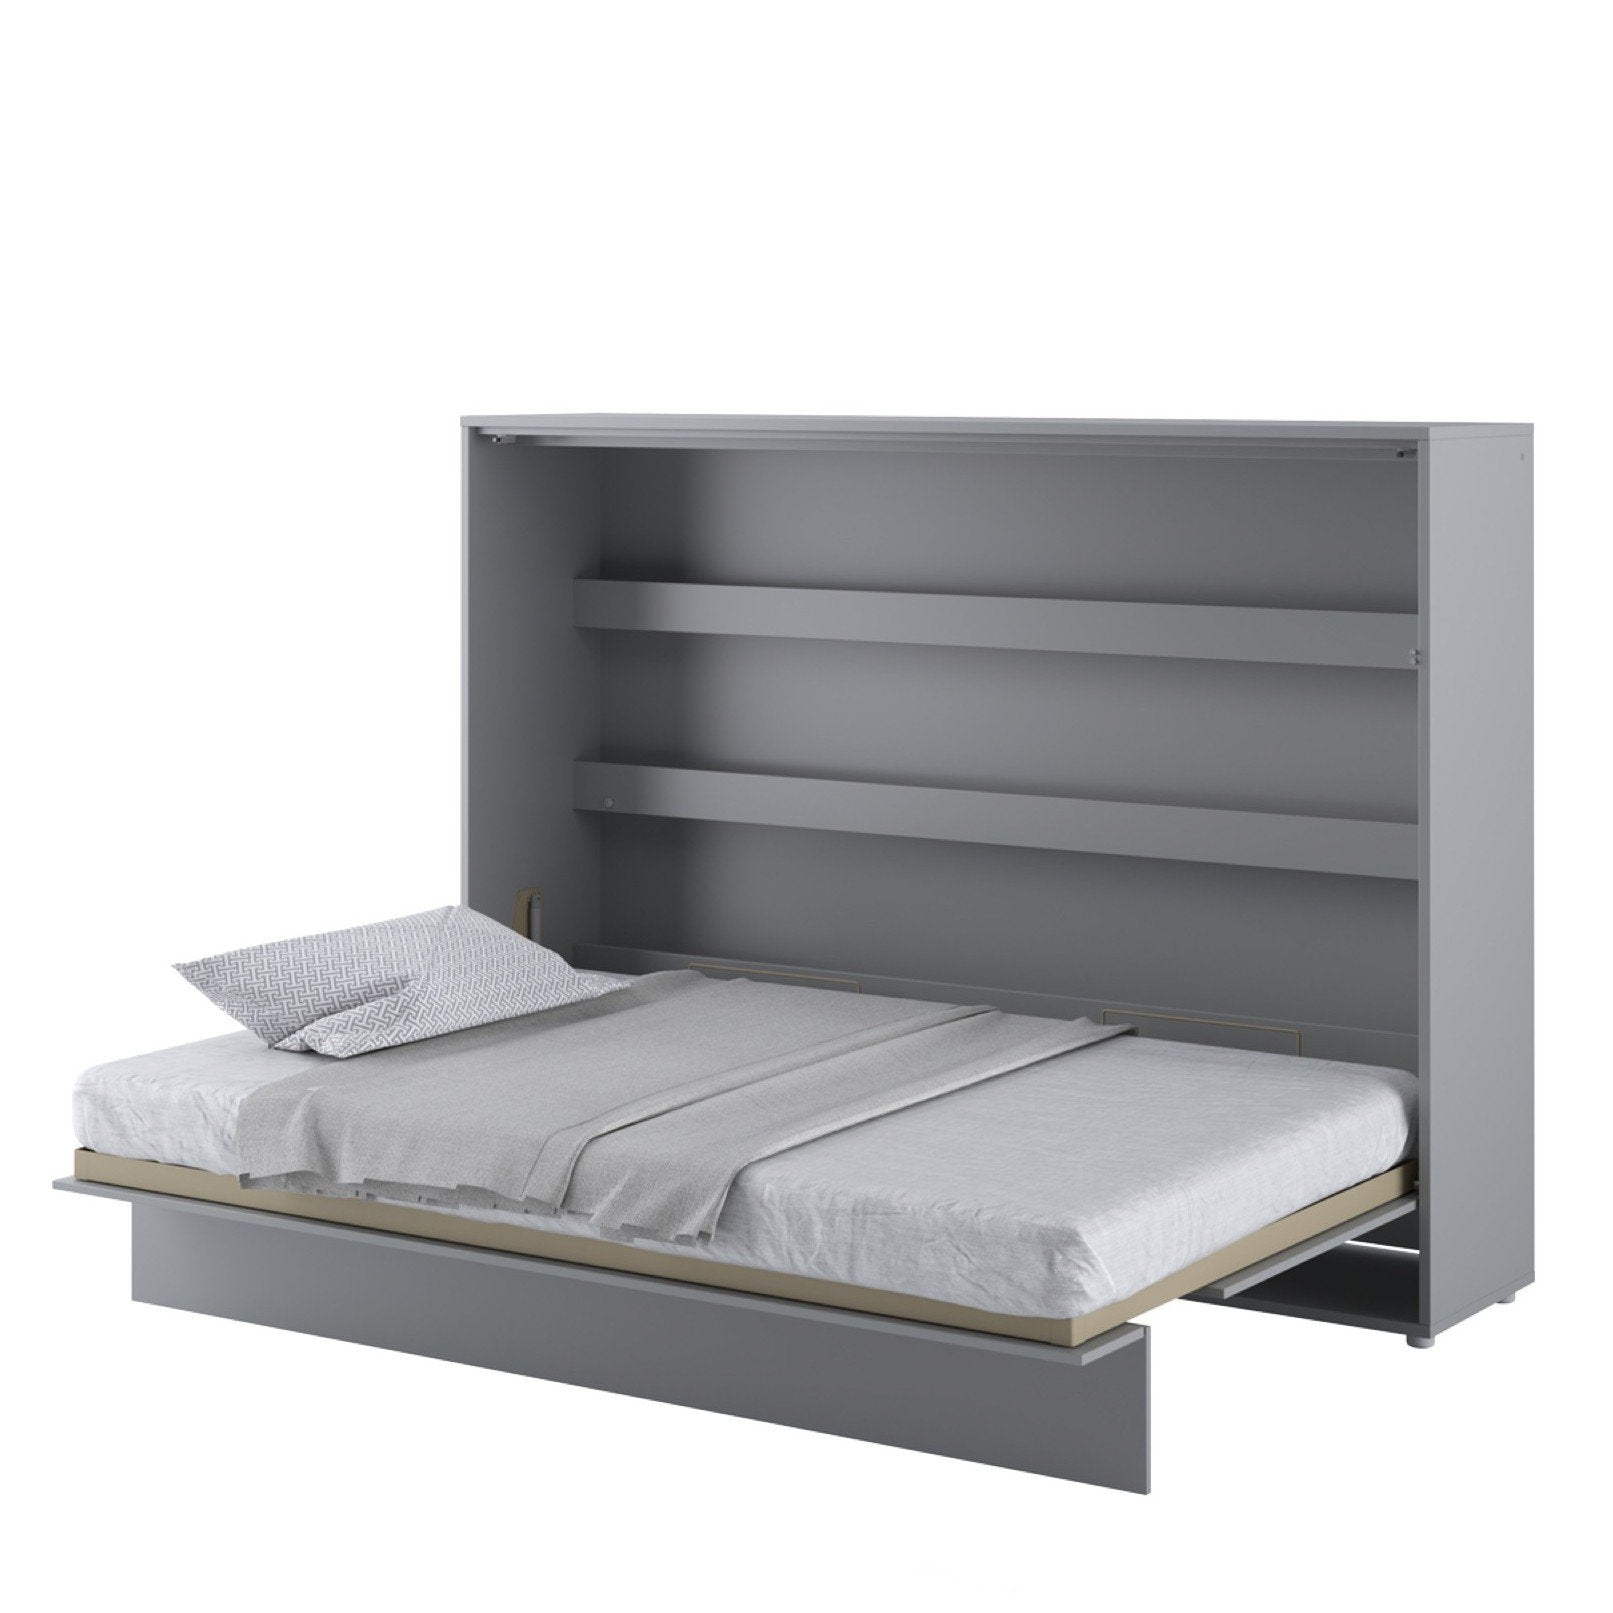 BC-04 Horizontal Wall Bed Concept 140cm-Wall Bed